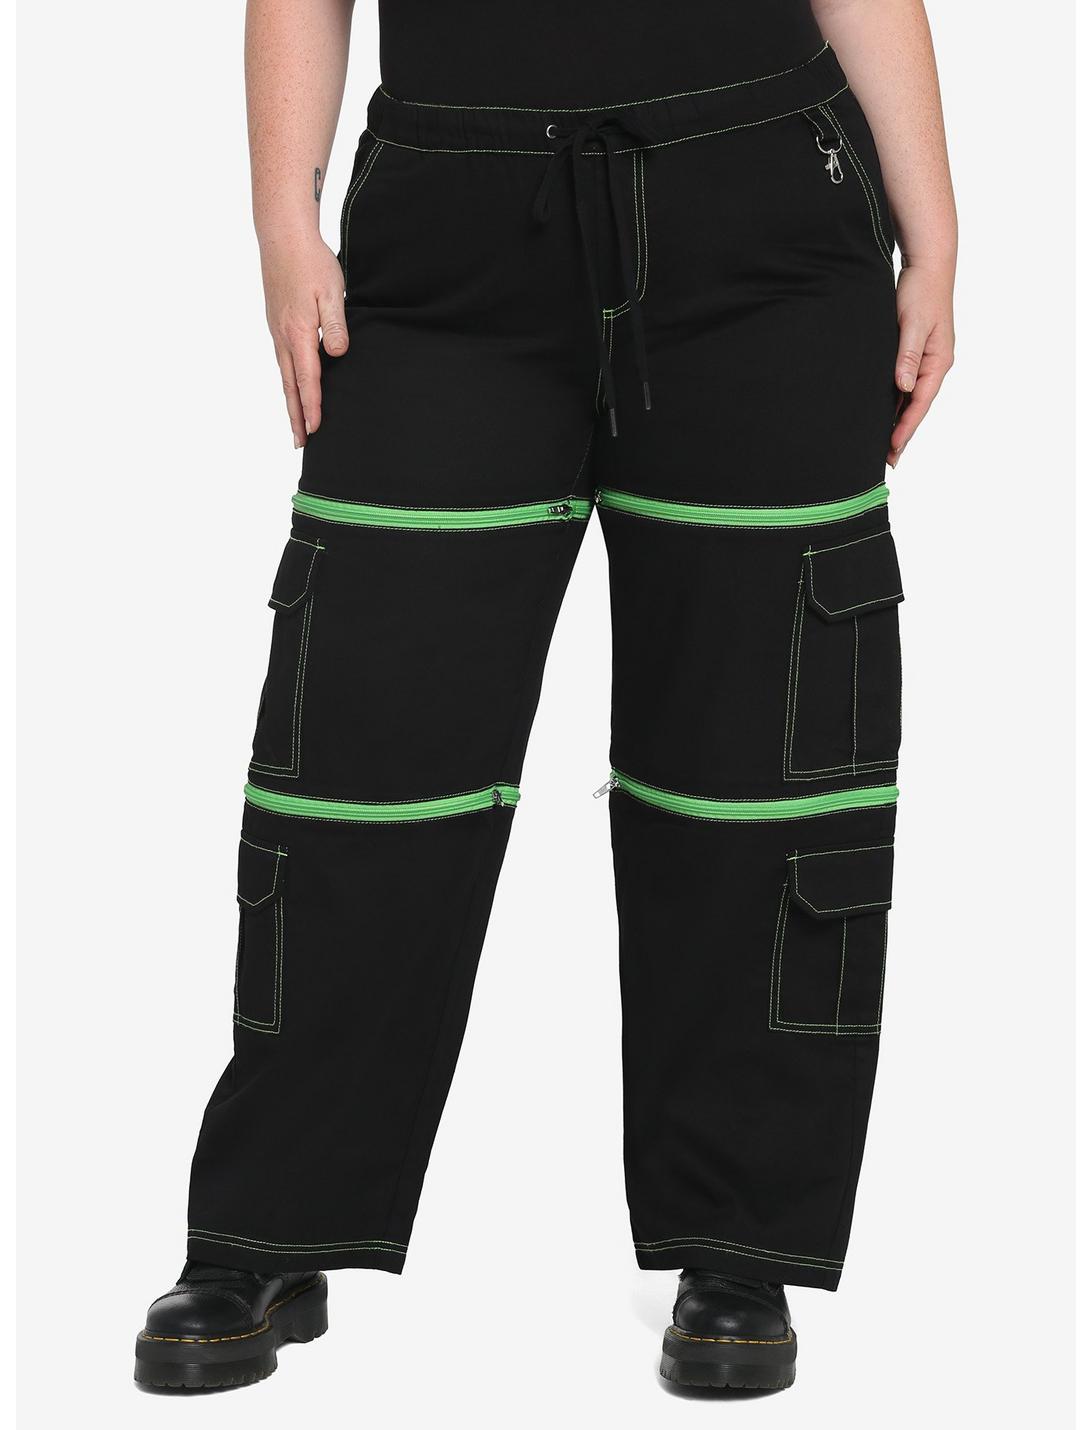 Black & Green Zip-Off Carpenter Pants Plus Size, BLACK, hi-res